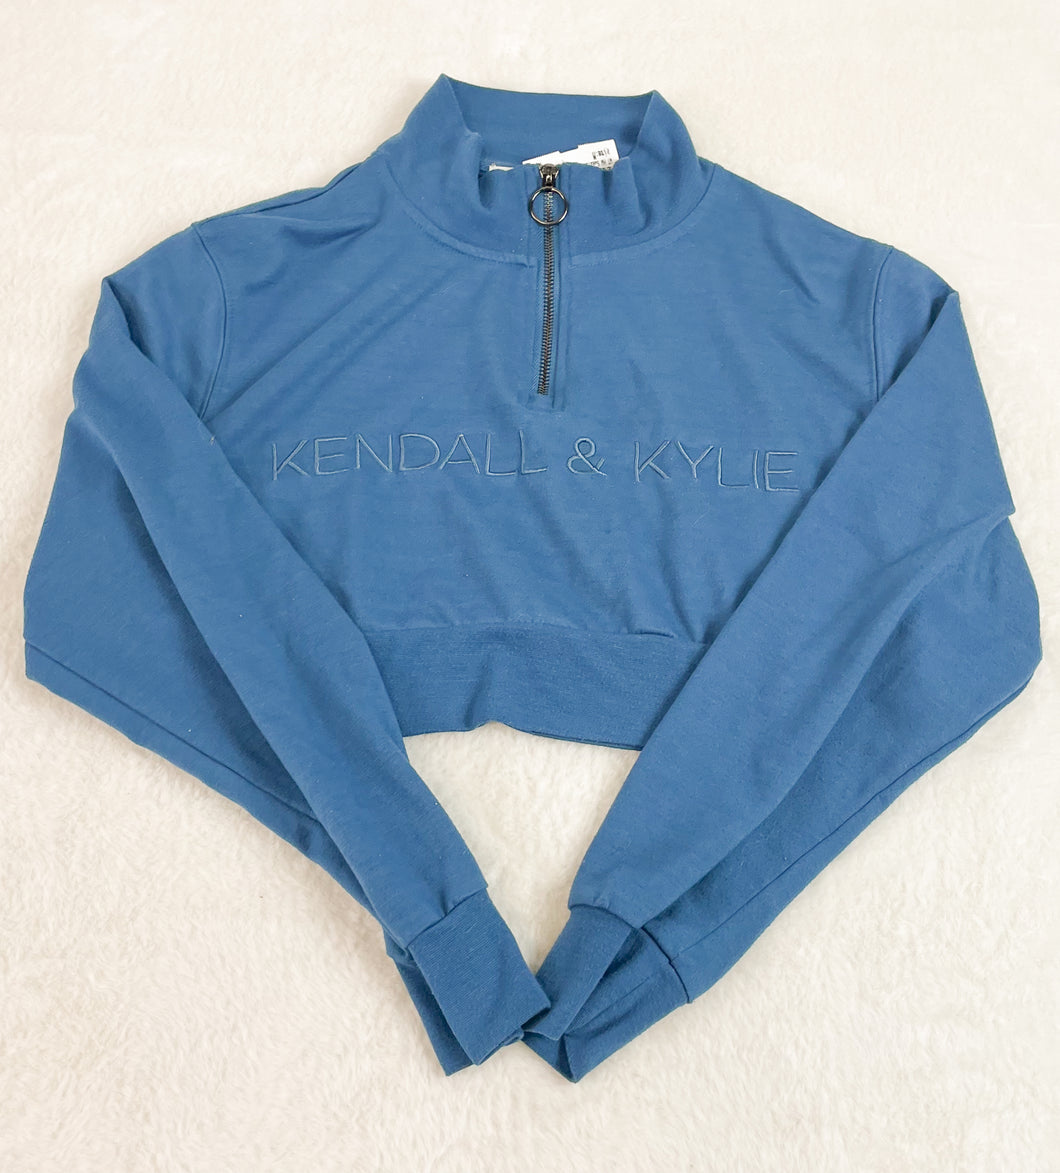 Kendall & Kylie Sweatshirt Size Medium *